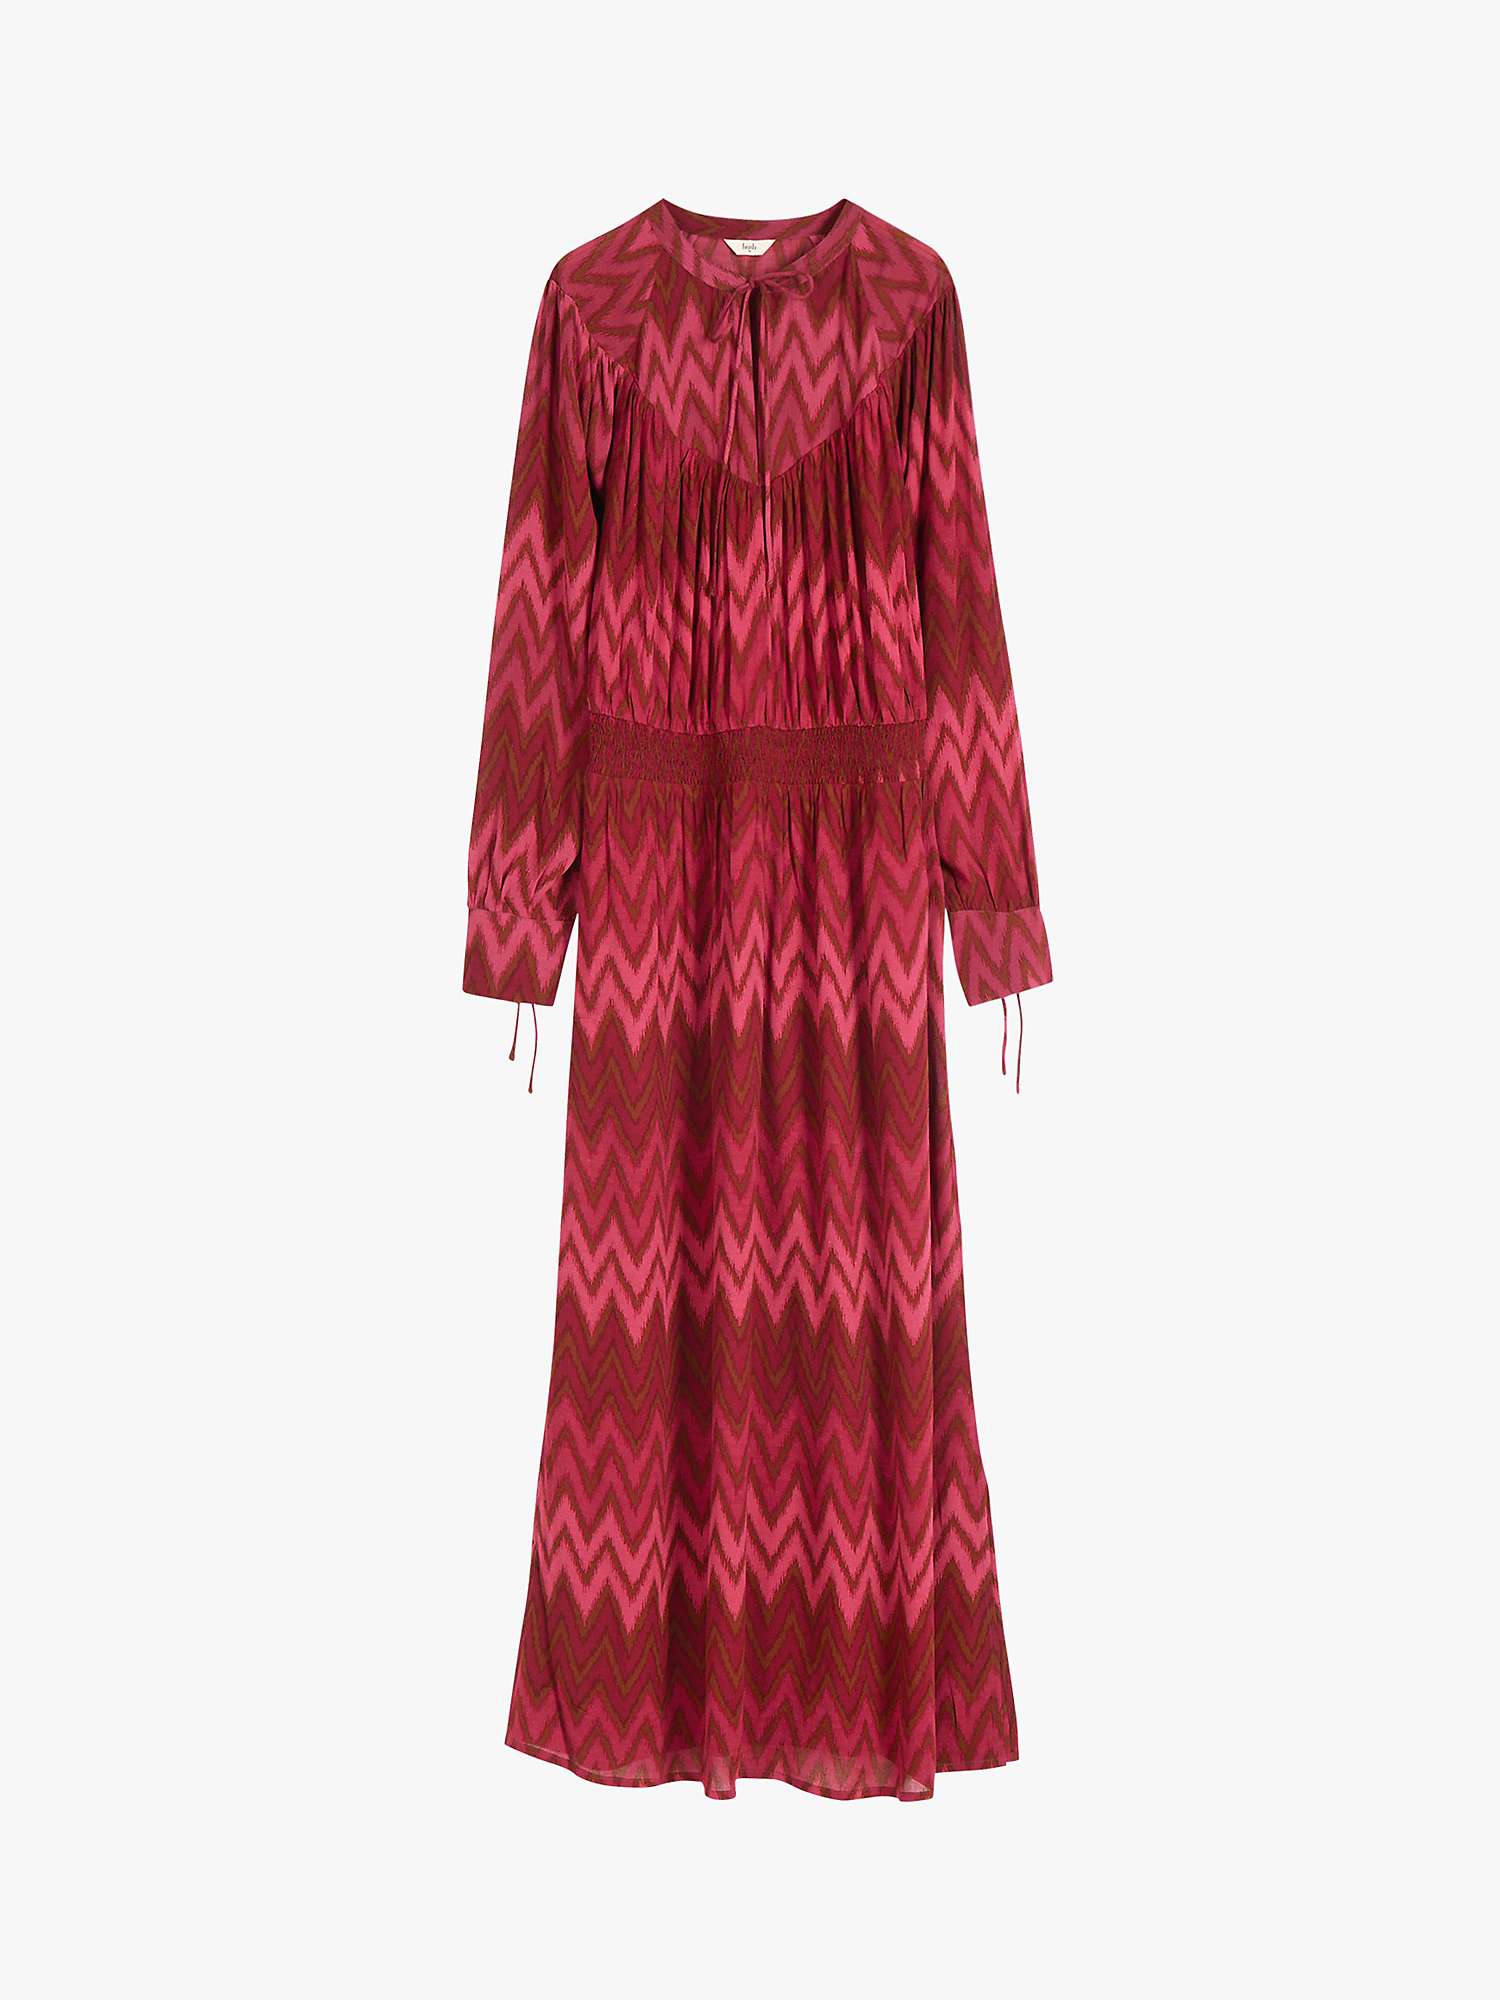 HUSH Melodie Boho Midi Dress, Red Chevron Stripe at John Lewis & Partners